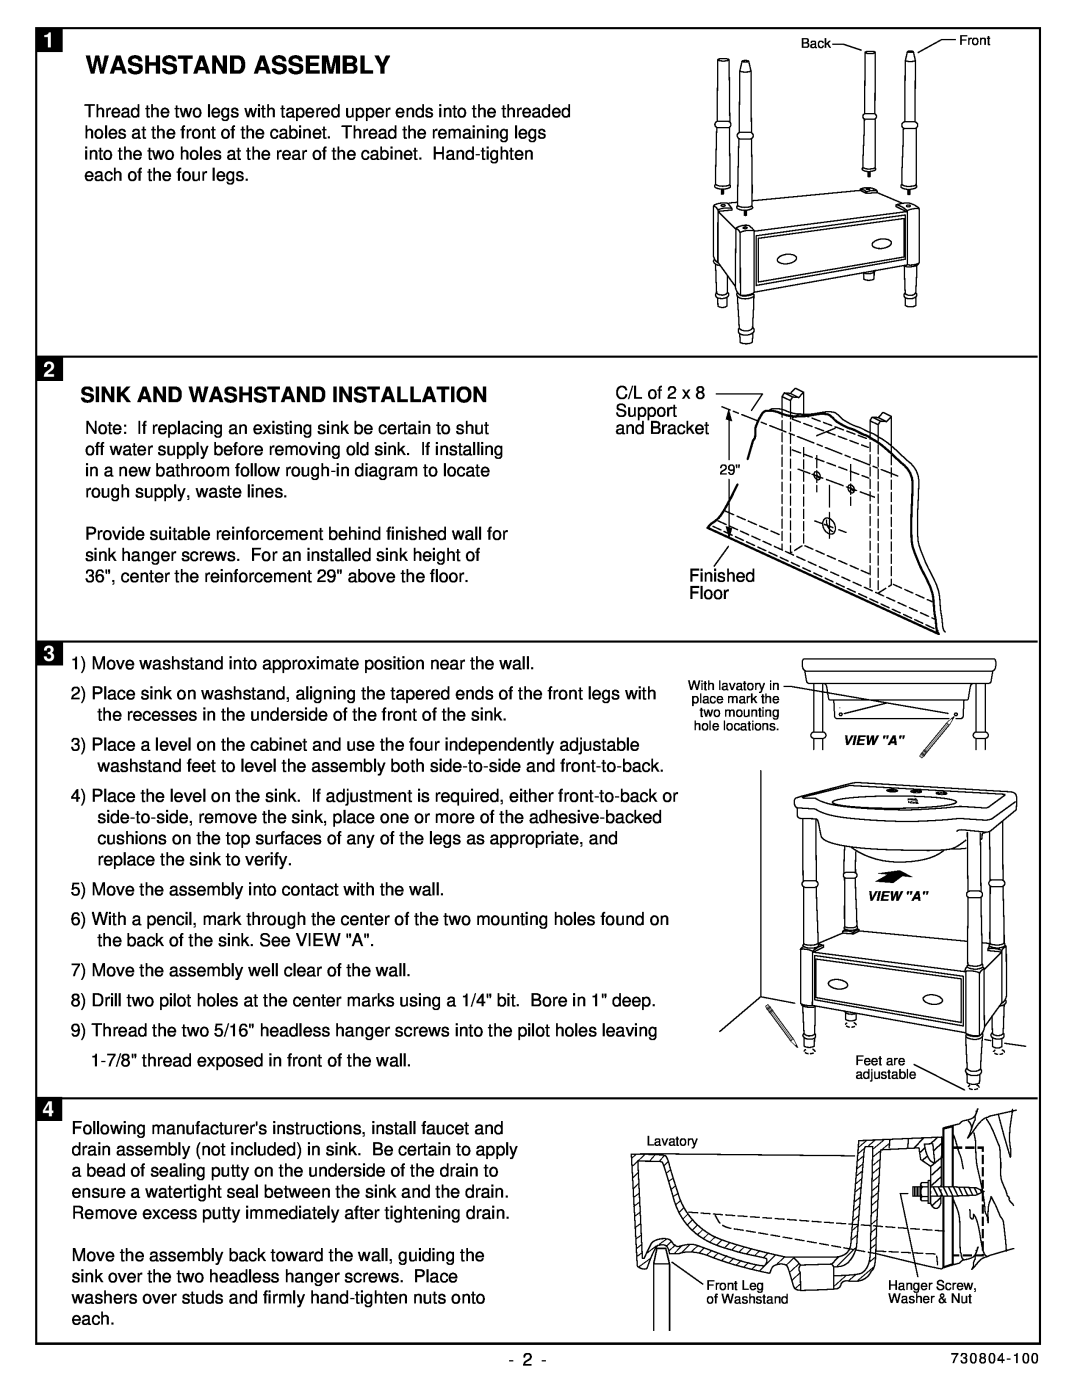 American Standard 9422.020 installation instructions Washstand Assembly, Sink And Washstand Installation 